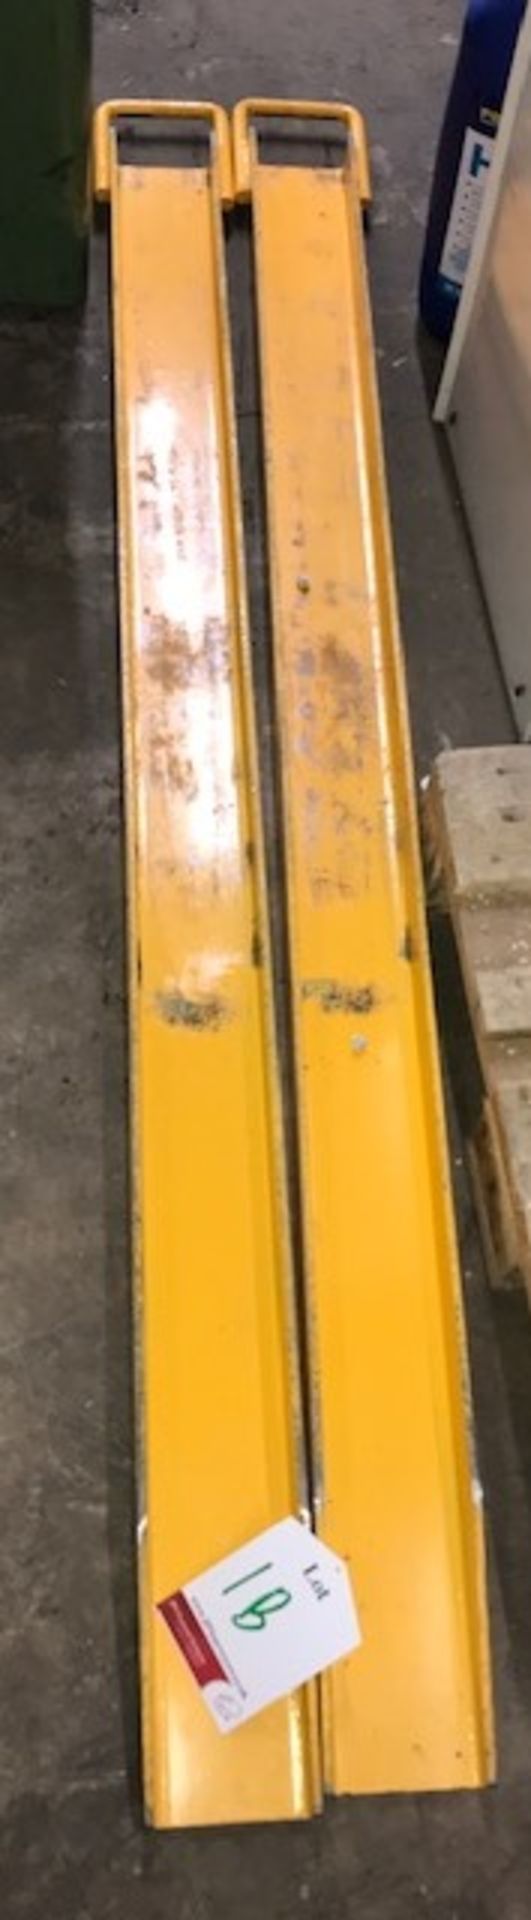 Set of Forklift Extensions - L = 190cm W = 15cm